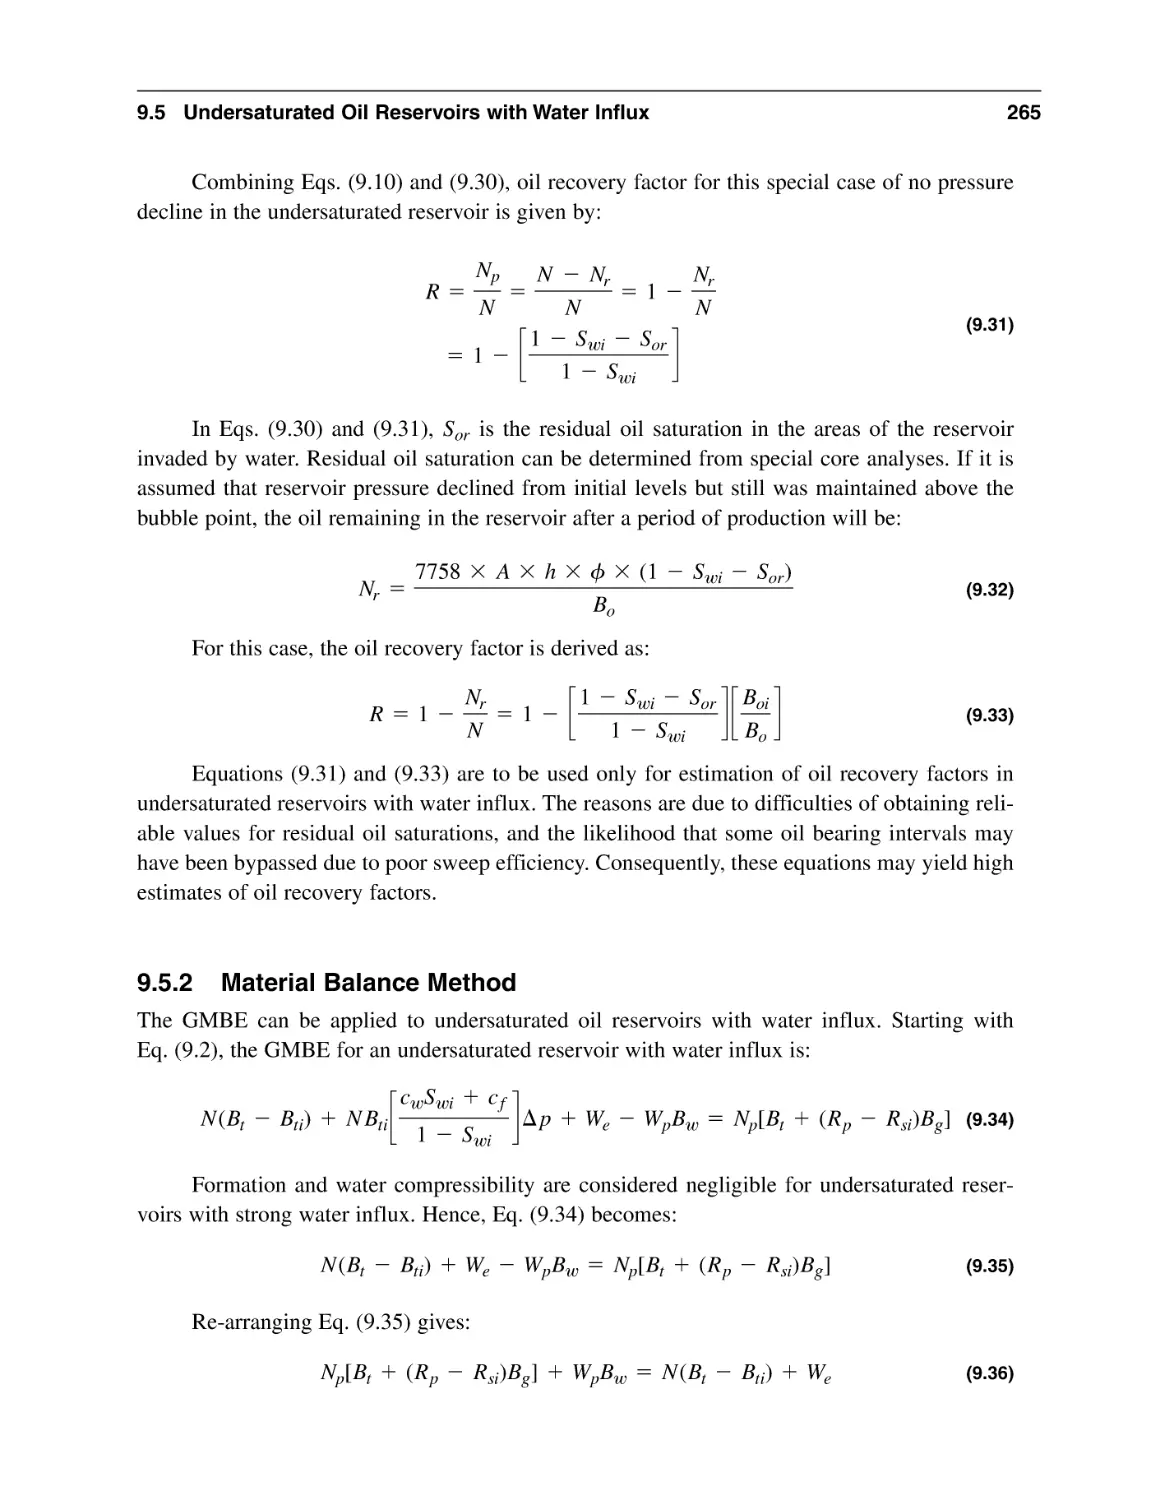 9.5.2 Material Balance Method